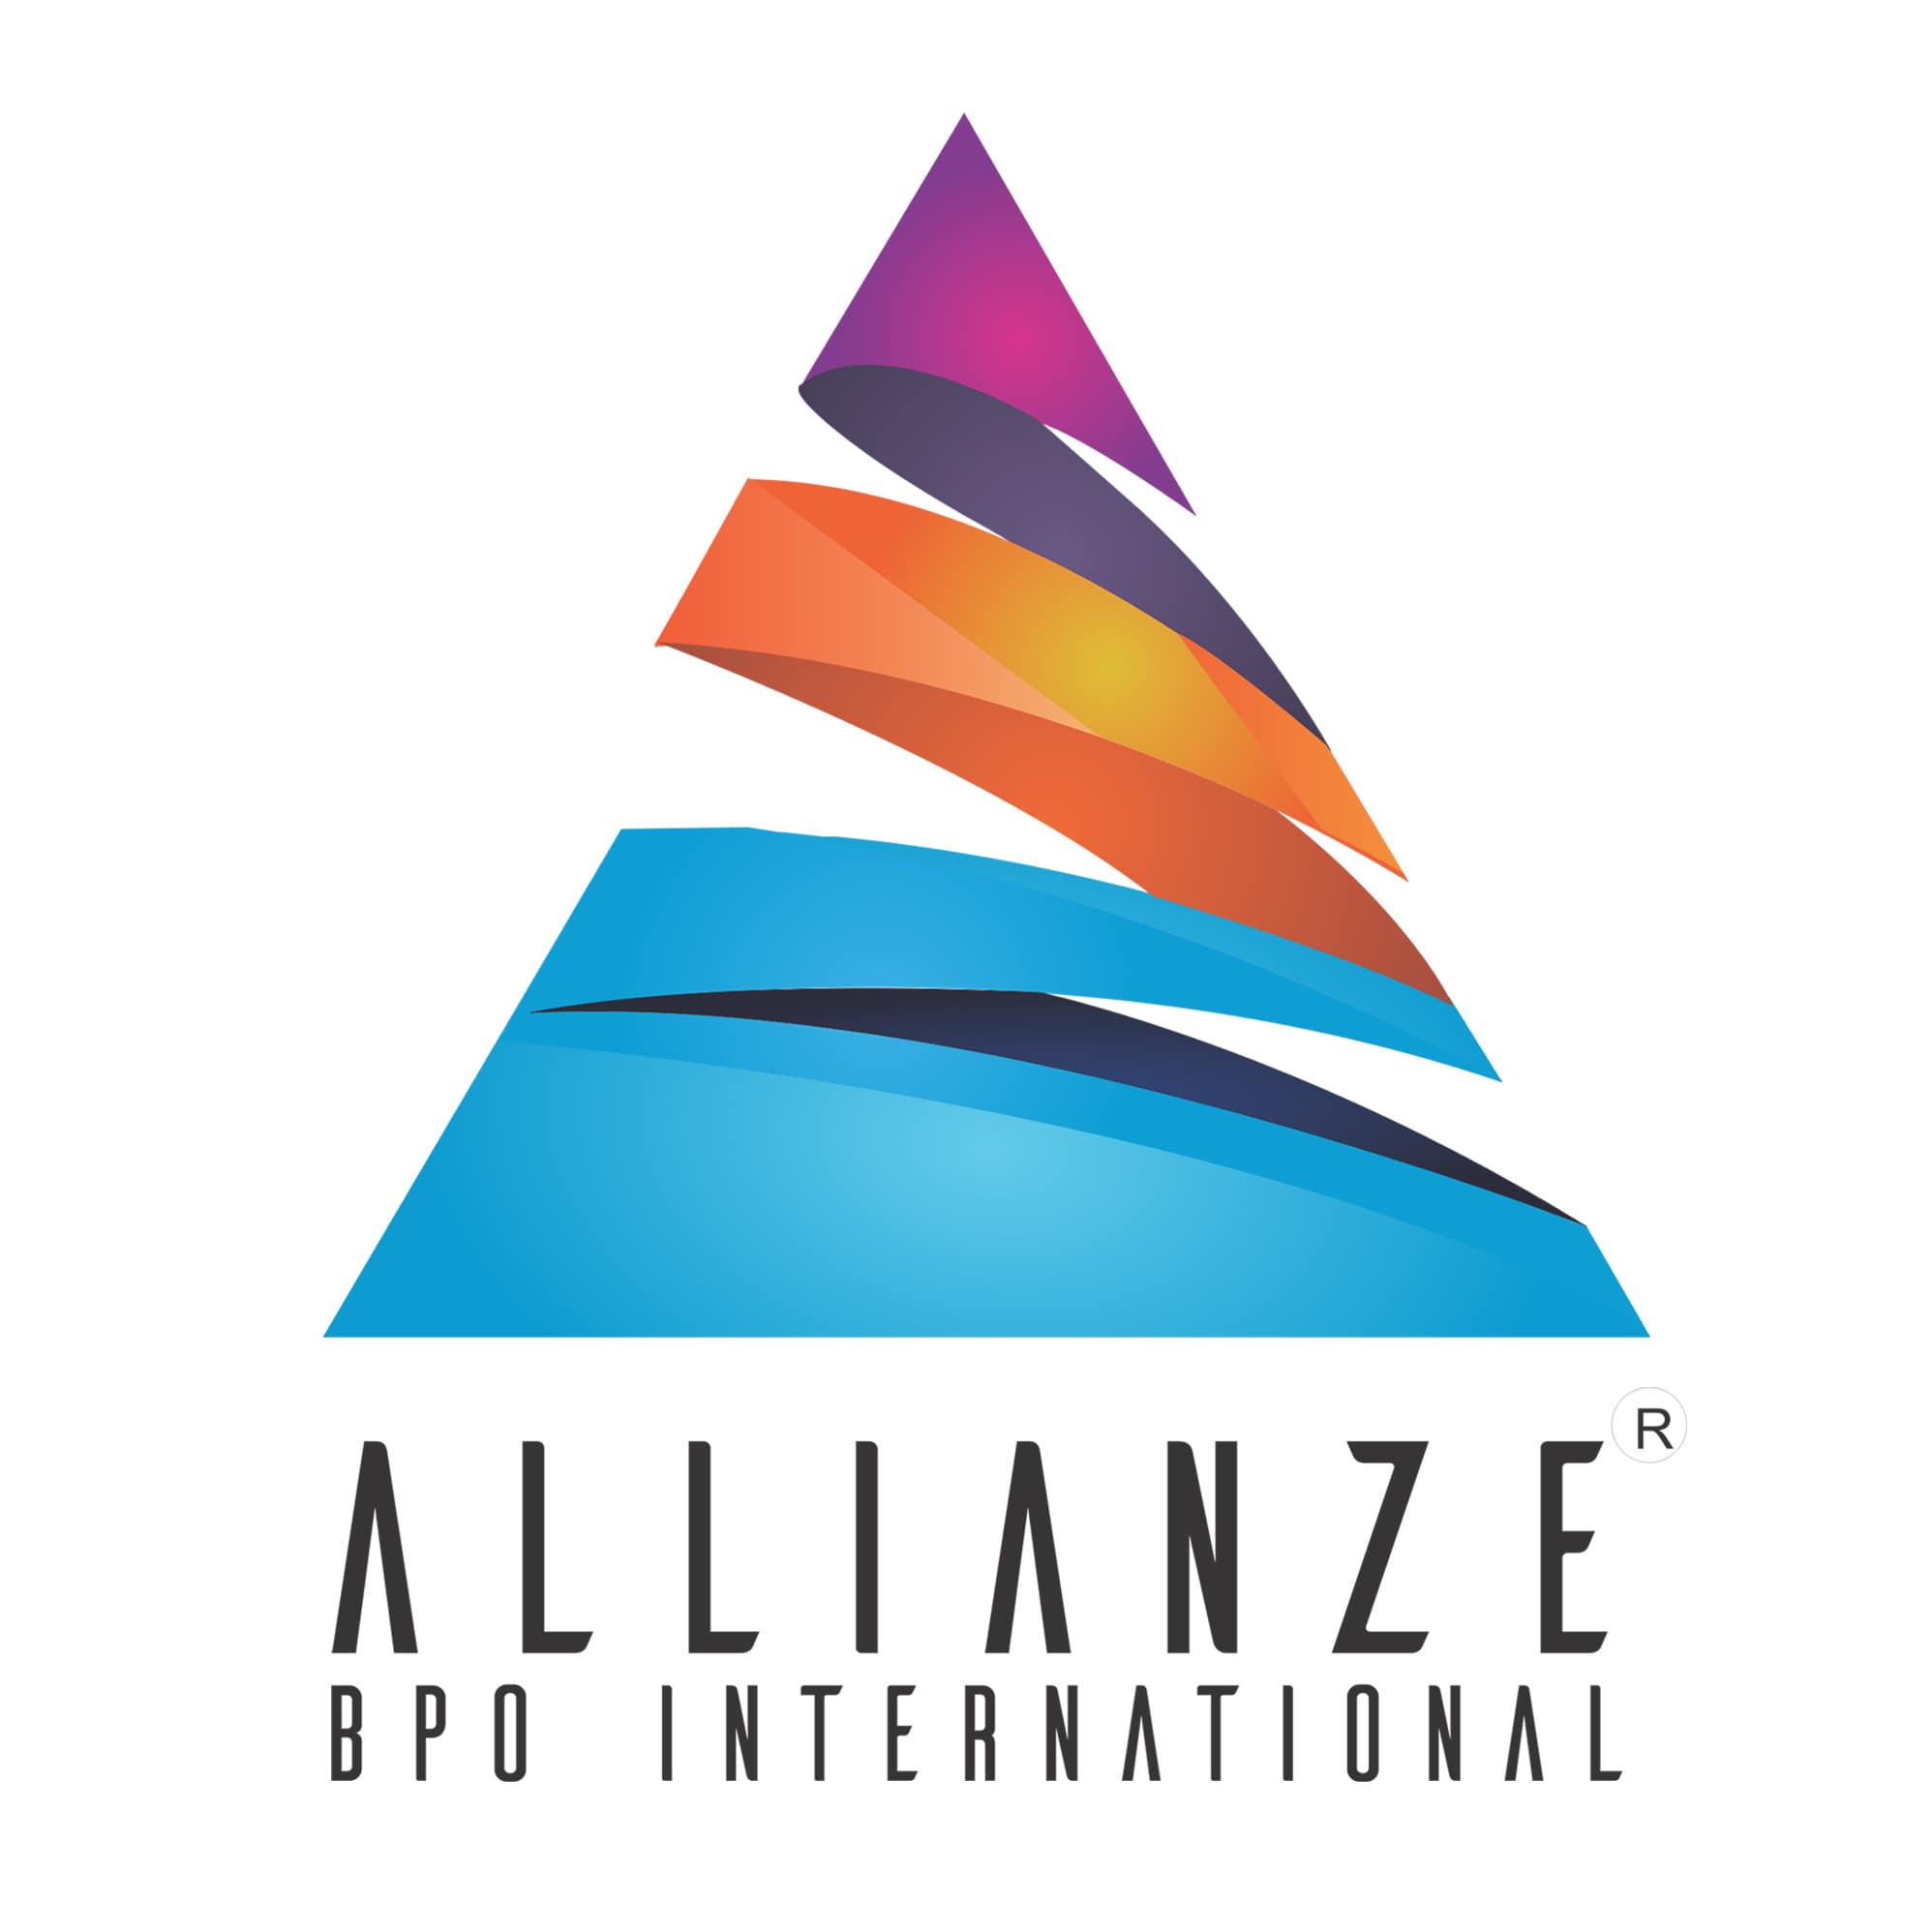 Allianze BPO International profile on Qualified.One